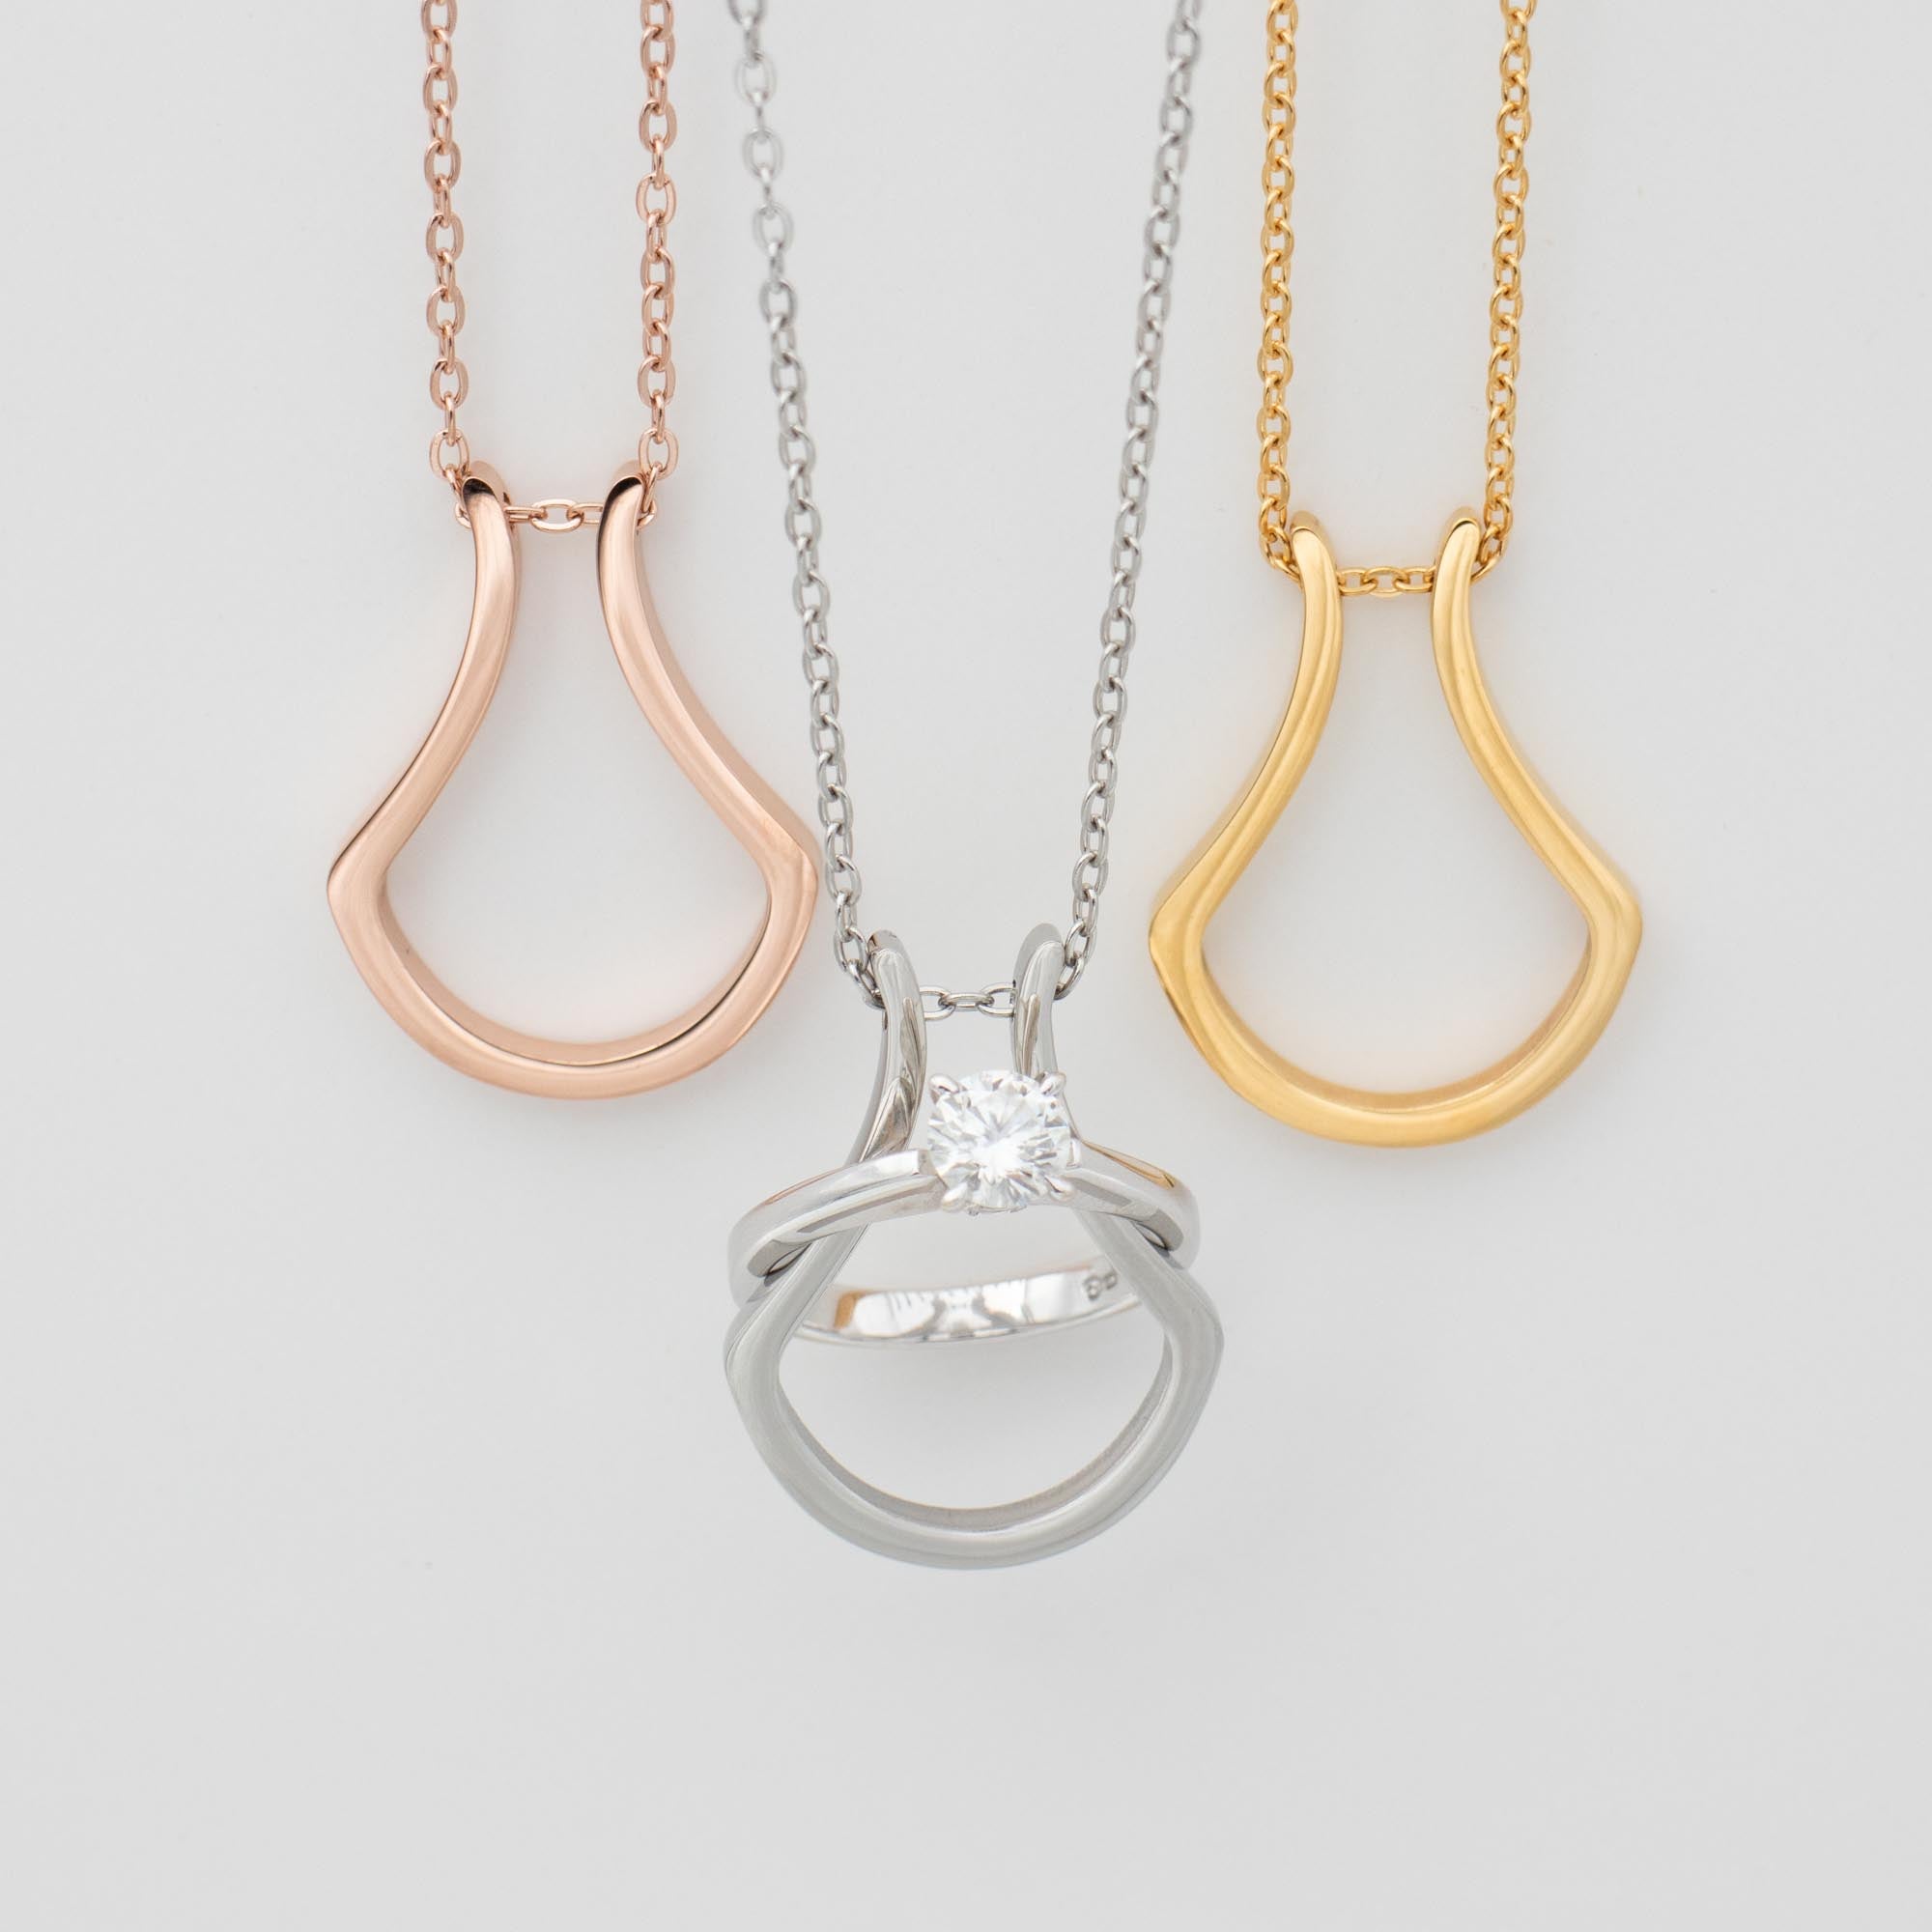 Sterling Silver Ring Holder Necklace, Oval Holding Ring Necklace. CHOOSE  Chain, Ring Holder Jewelry. Original Design Lifeofsilver Sm-131 - Etsy